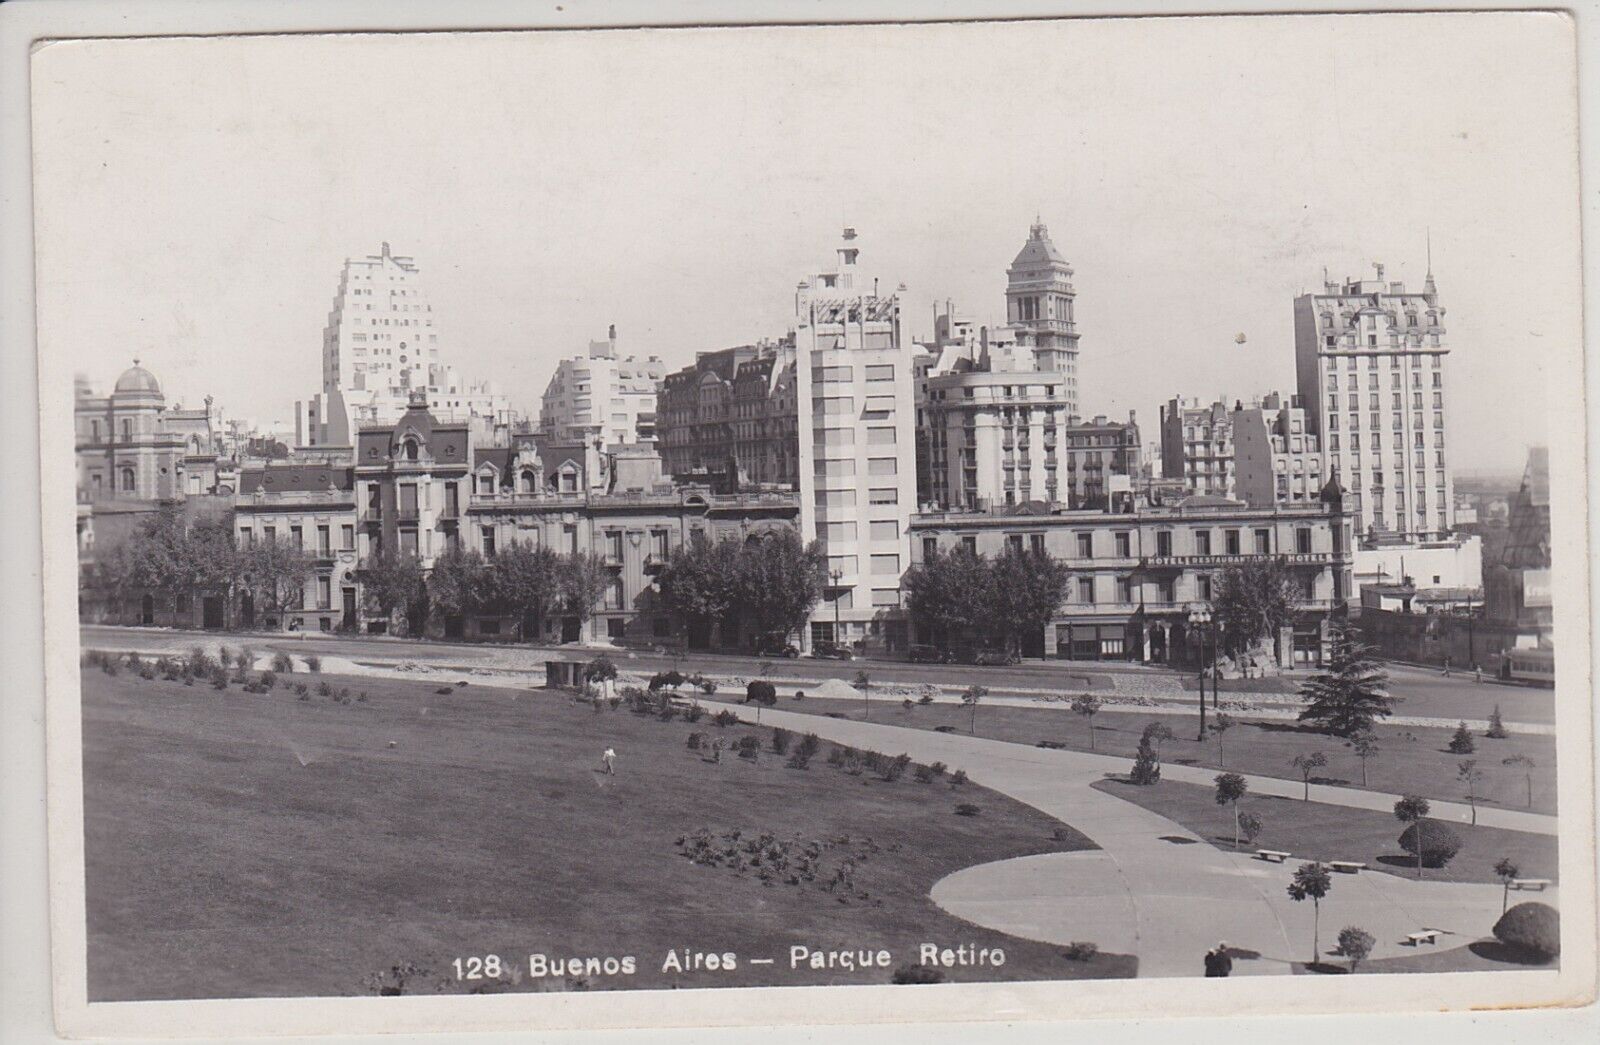 Buenos Aires, Argentina. Parcue Retiro Vintage Real Photo Postcard